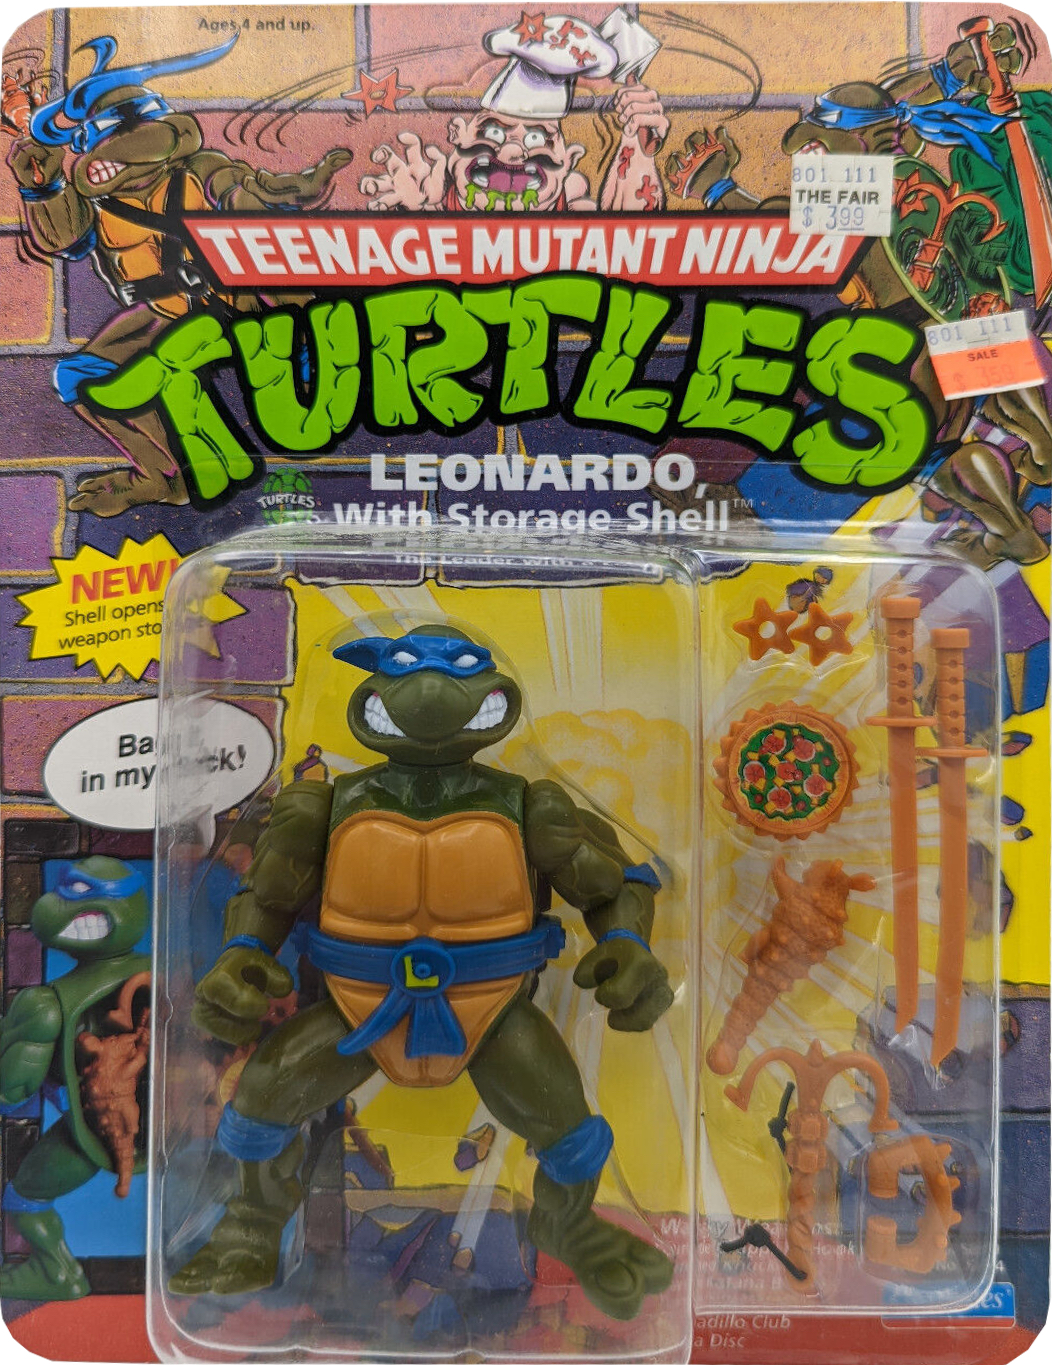 https://www.actionfigure411.com/teenage-mutant-ninja-turtles/images/leonardo-with-storage-shell-4900.jpg